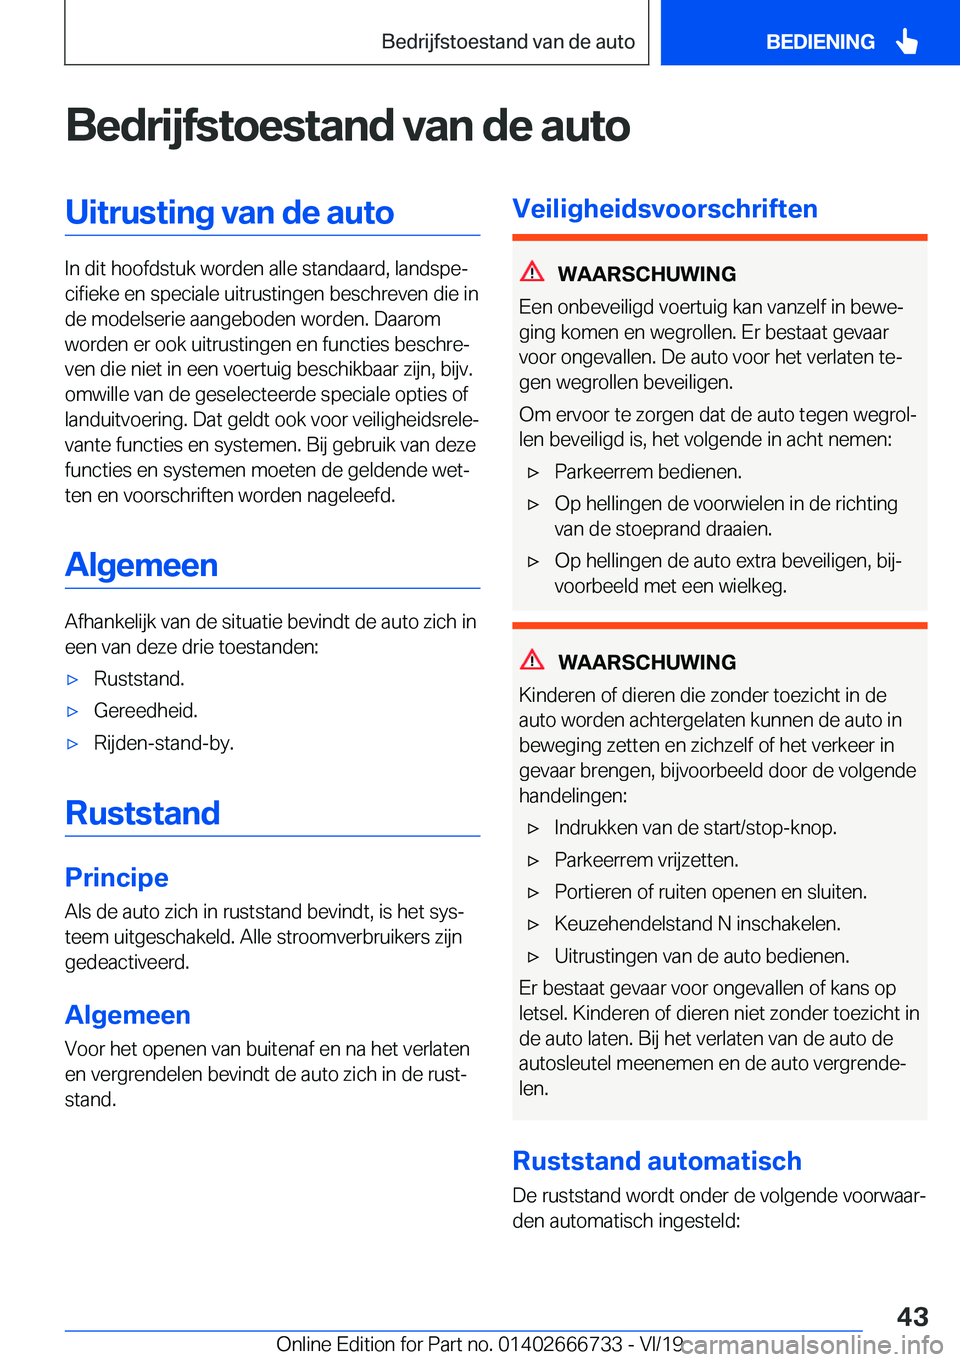 BMW M5 2020  Instructieboekjes (in Dutch) �B�e�d�r�i�j�f�s�t�o�e�s�t�a�n�d��v�a�n��d�e��a�u�t�o�U�i�t�r�u�s�t�i�n�g��v�a�n��d�e��a�u�t�o
�I�n��d�i�t��h�o�o�f�d�s�t�u�k��w�o�r�d�e�n��a�l�l�e��s�t�a�n�d�a�a�r�d�,��l�a�n�d�s�p�ej�c�